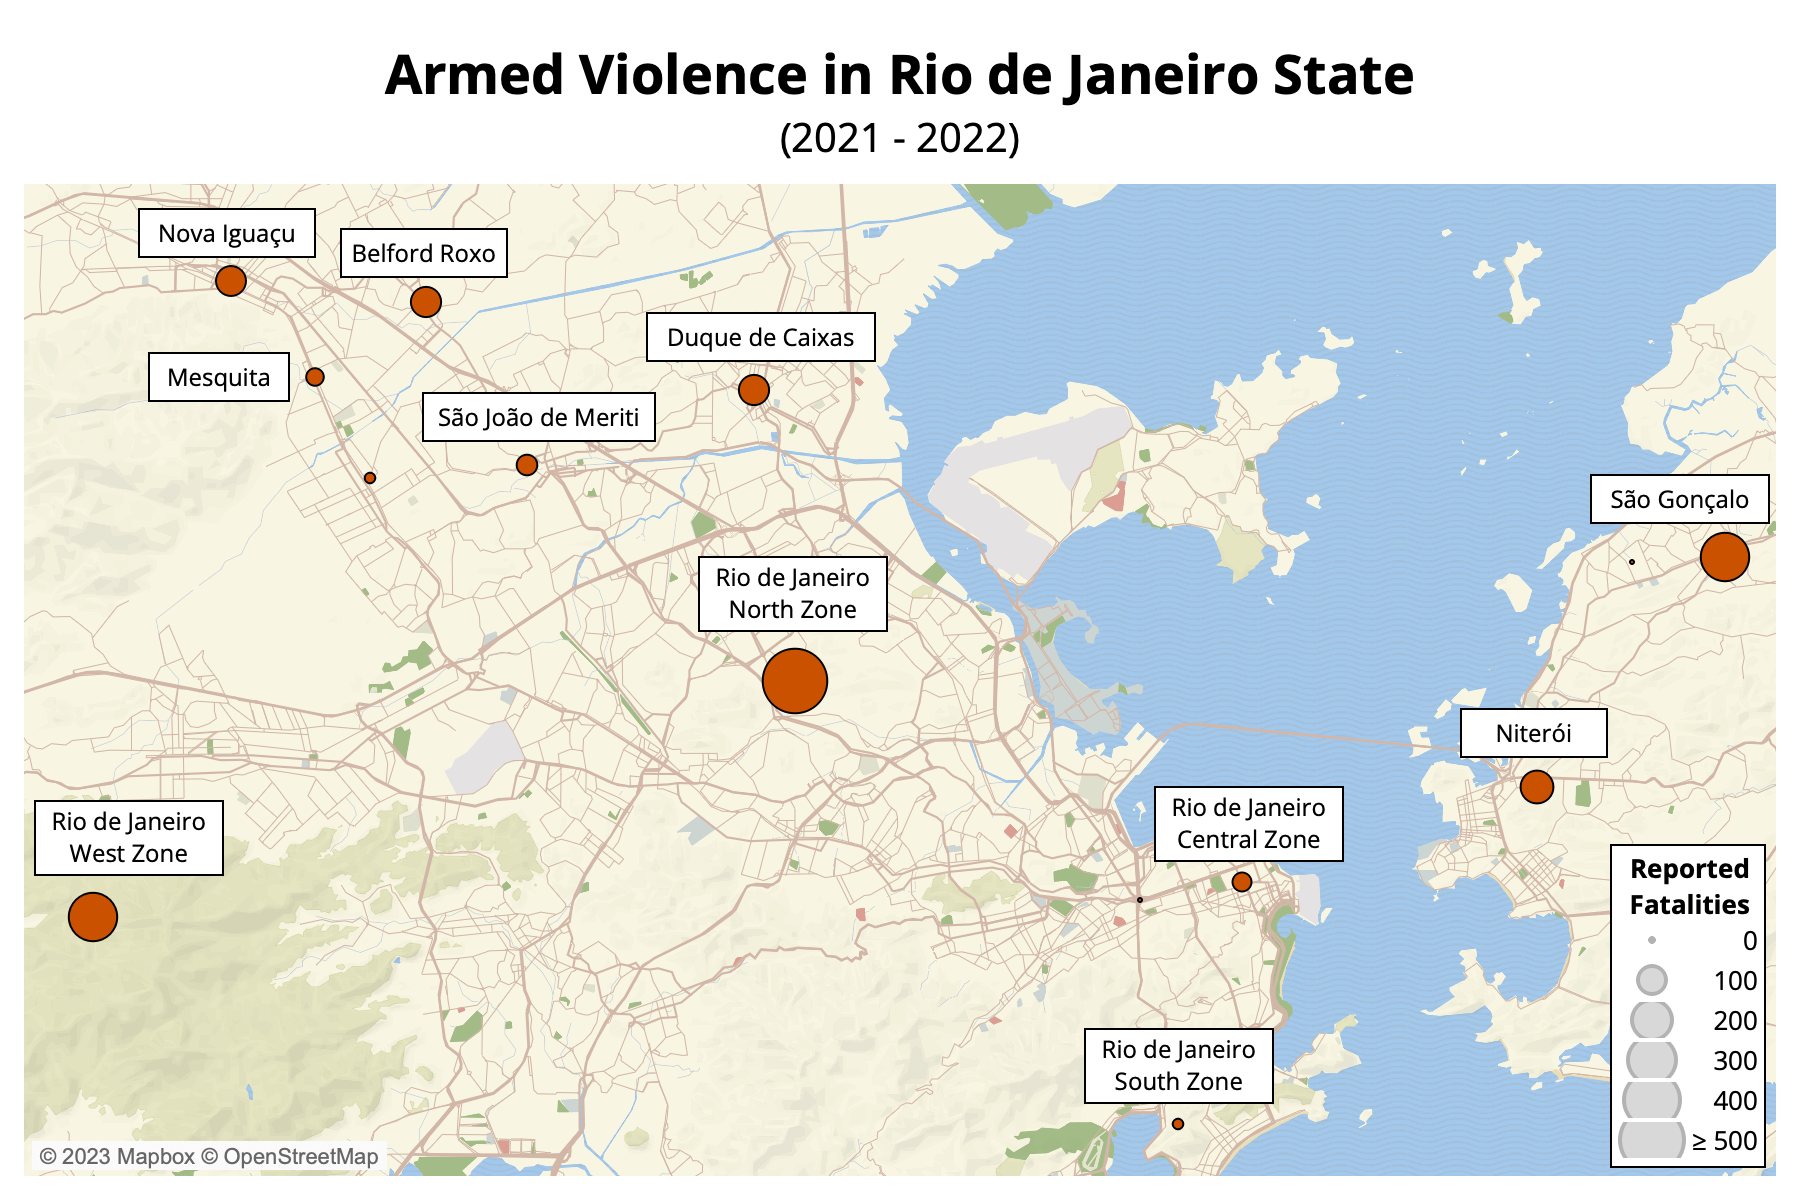 Territorial division of public security of the state of Rio de